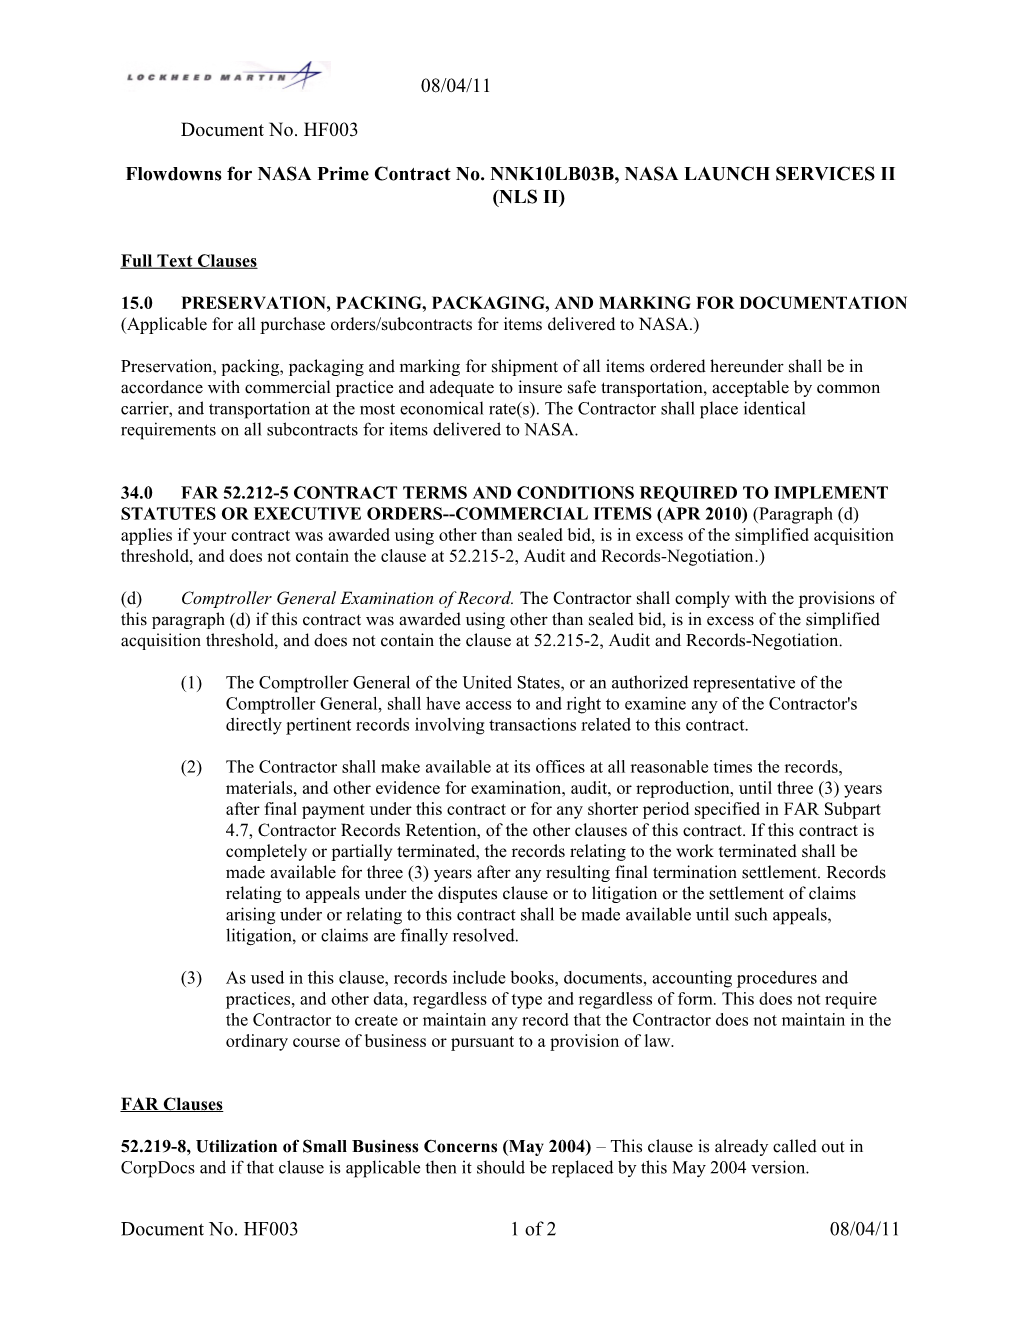 Flowdowns for NASA Prime Contract No. NNK10LB03B, NASA LAUNCH SERVICES II (NLS II)